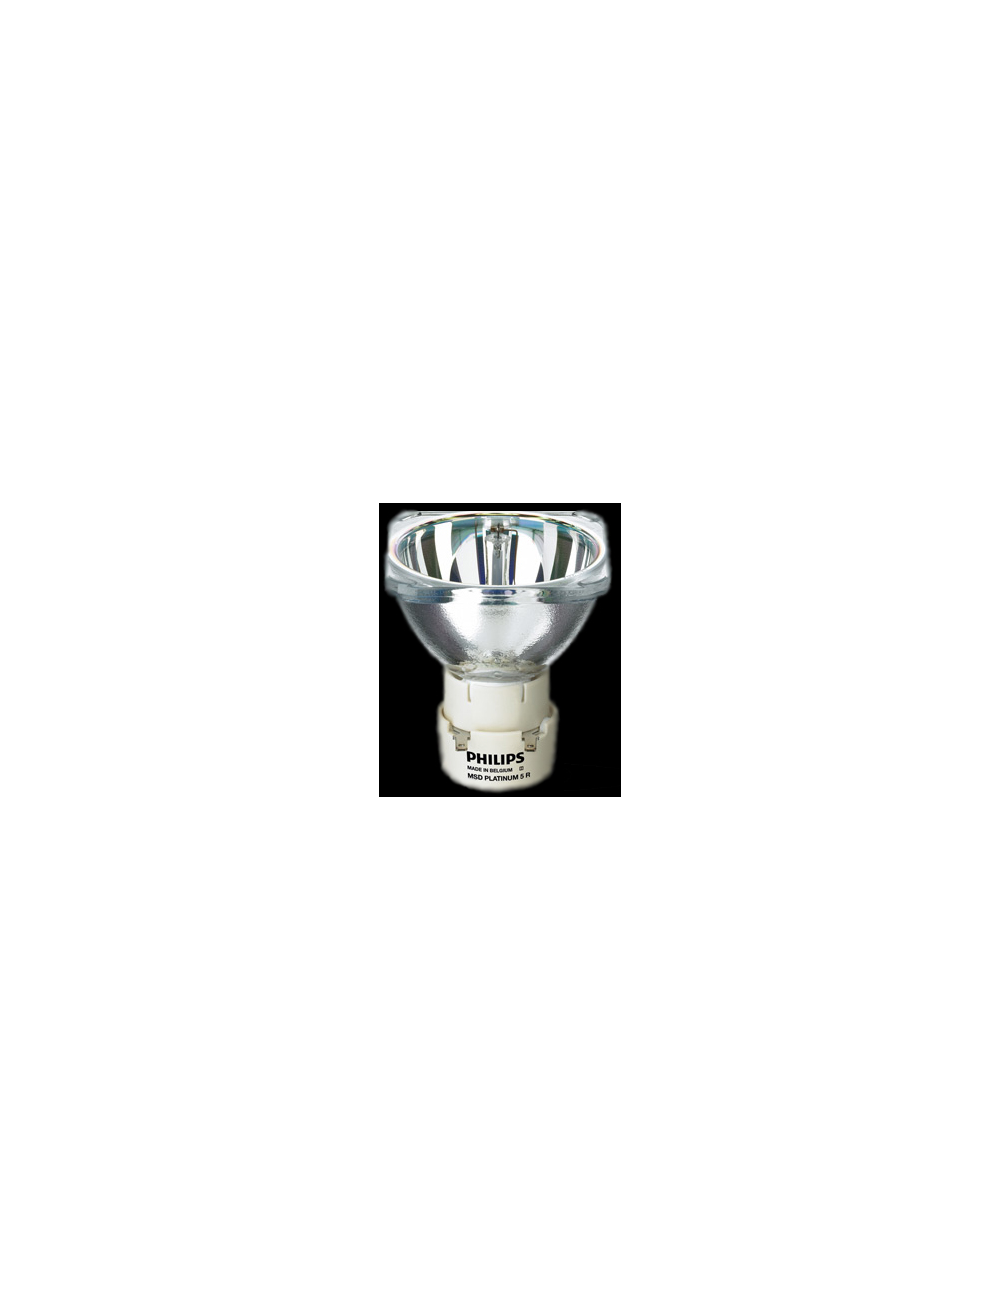 Philips MSD 160W Platinum 5R lamp - 8000K - 2000H - 7950lm